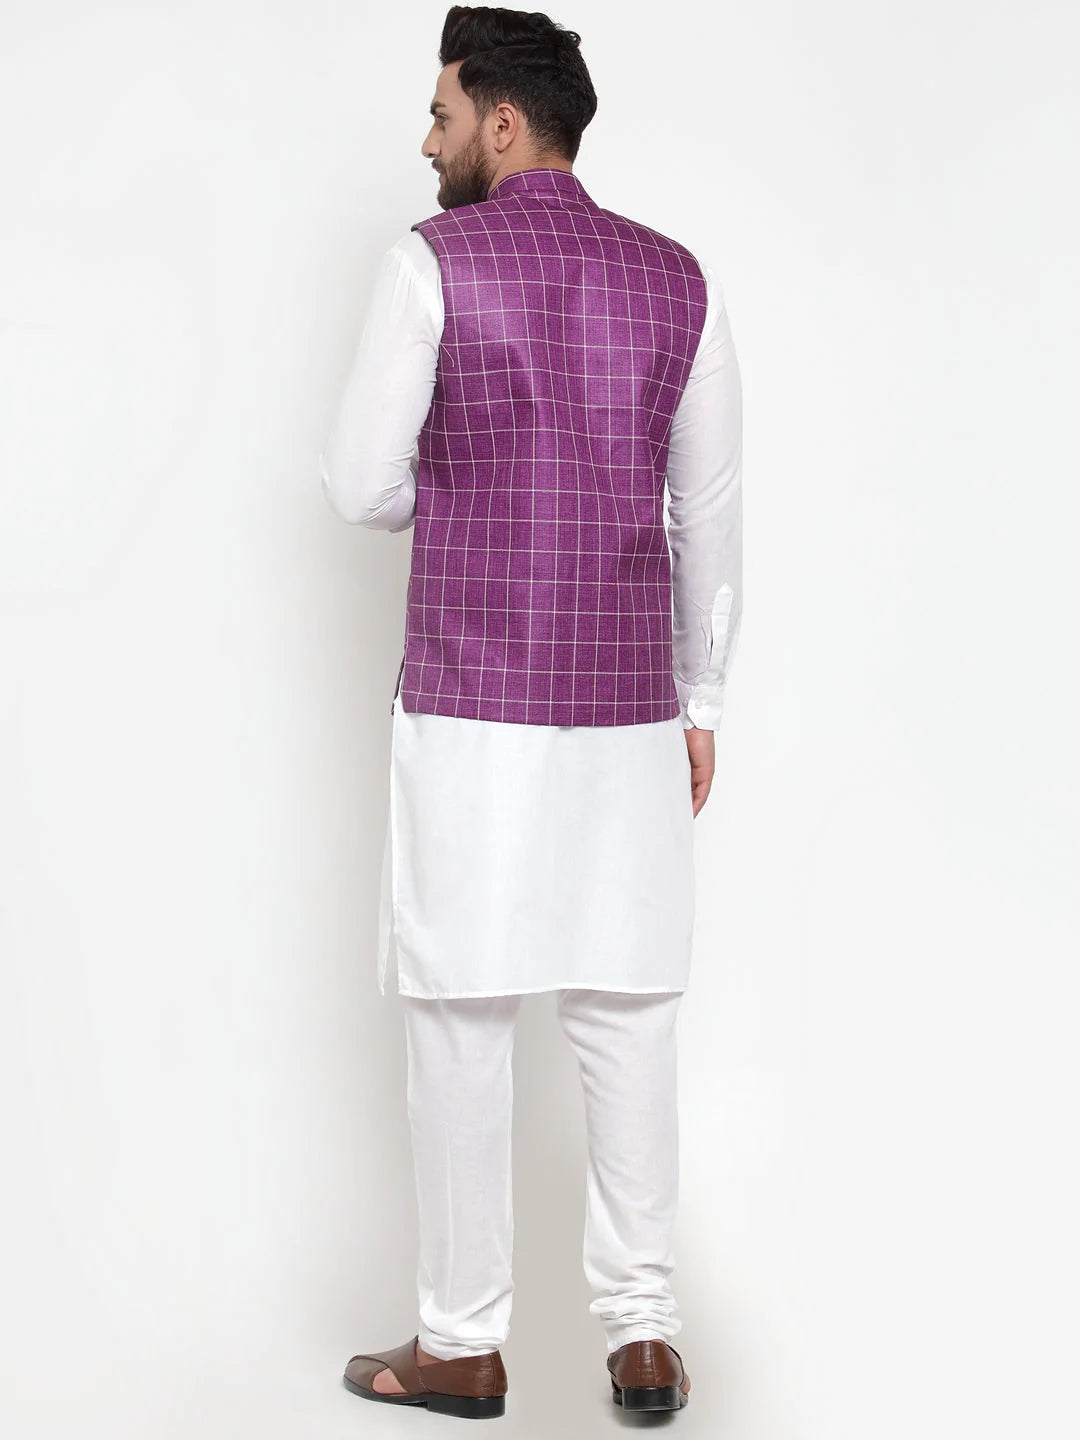 Jompers Men's Solid Kurta Pajama with Checked Waistcoat ( JOKP WC 4053 Purple )